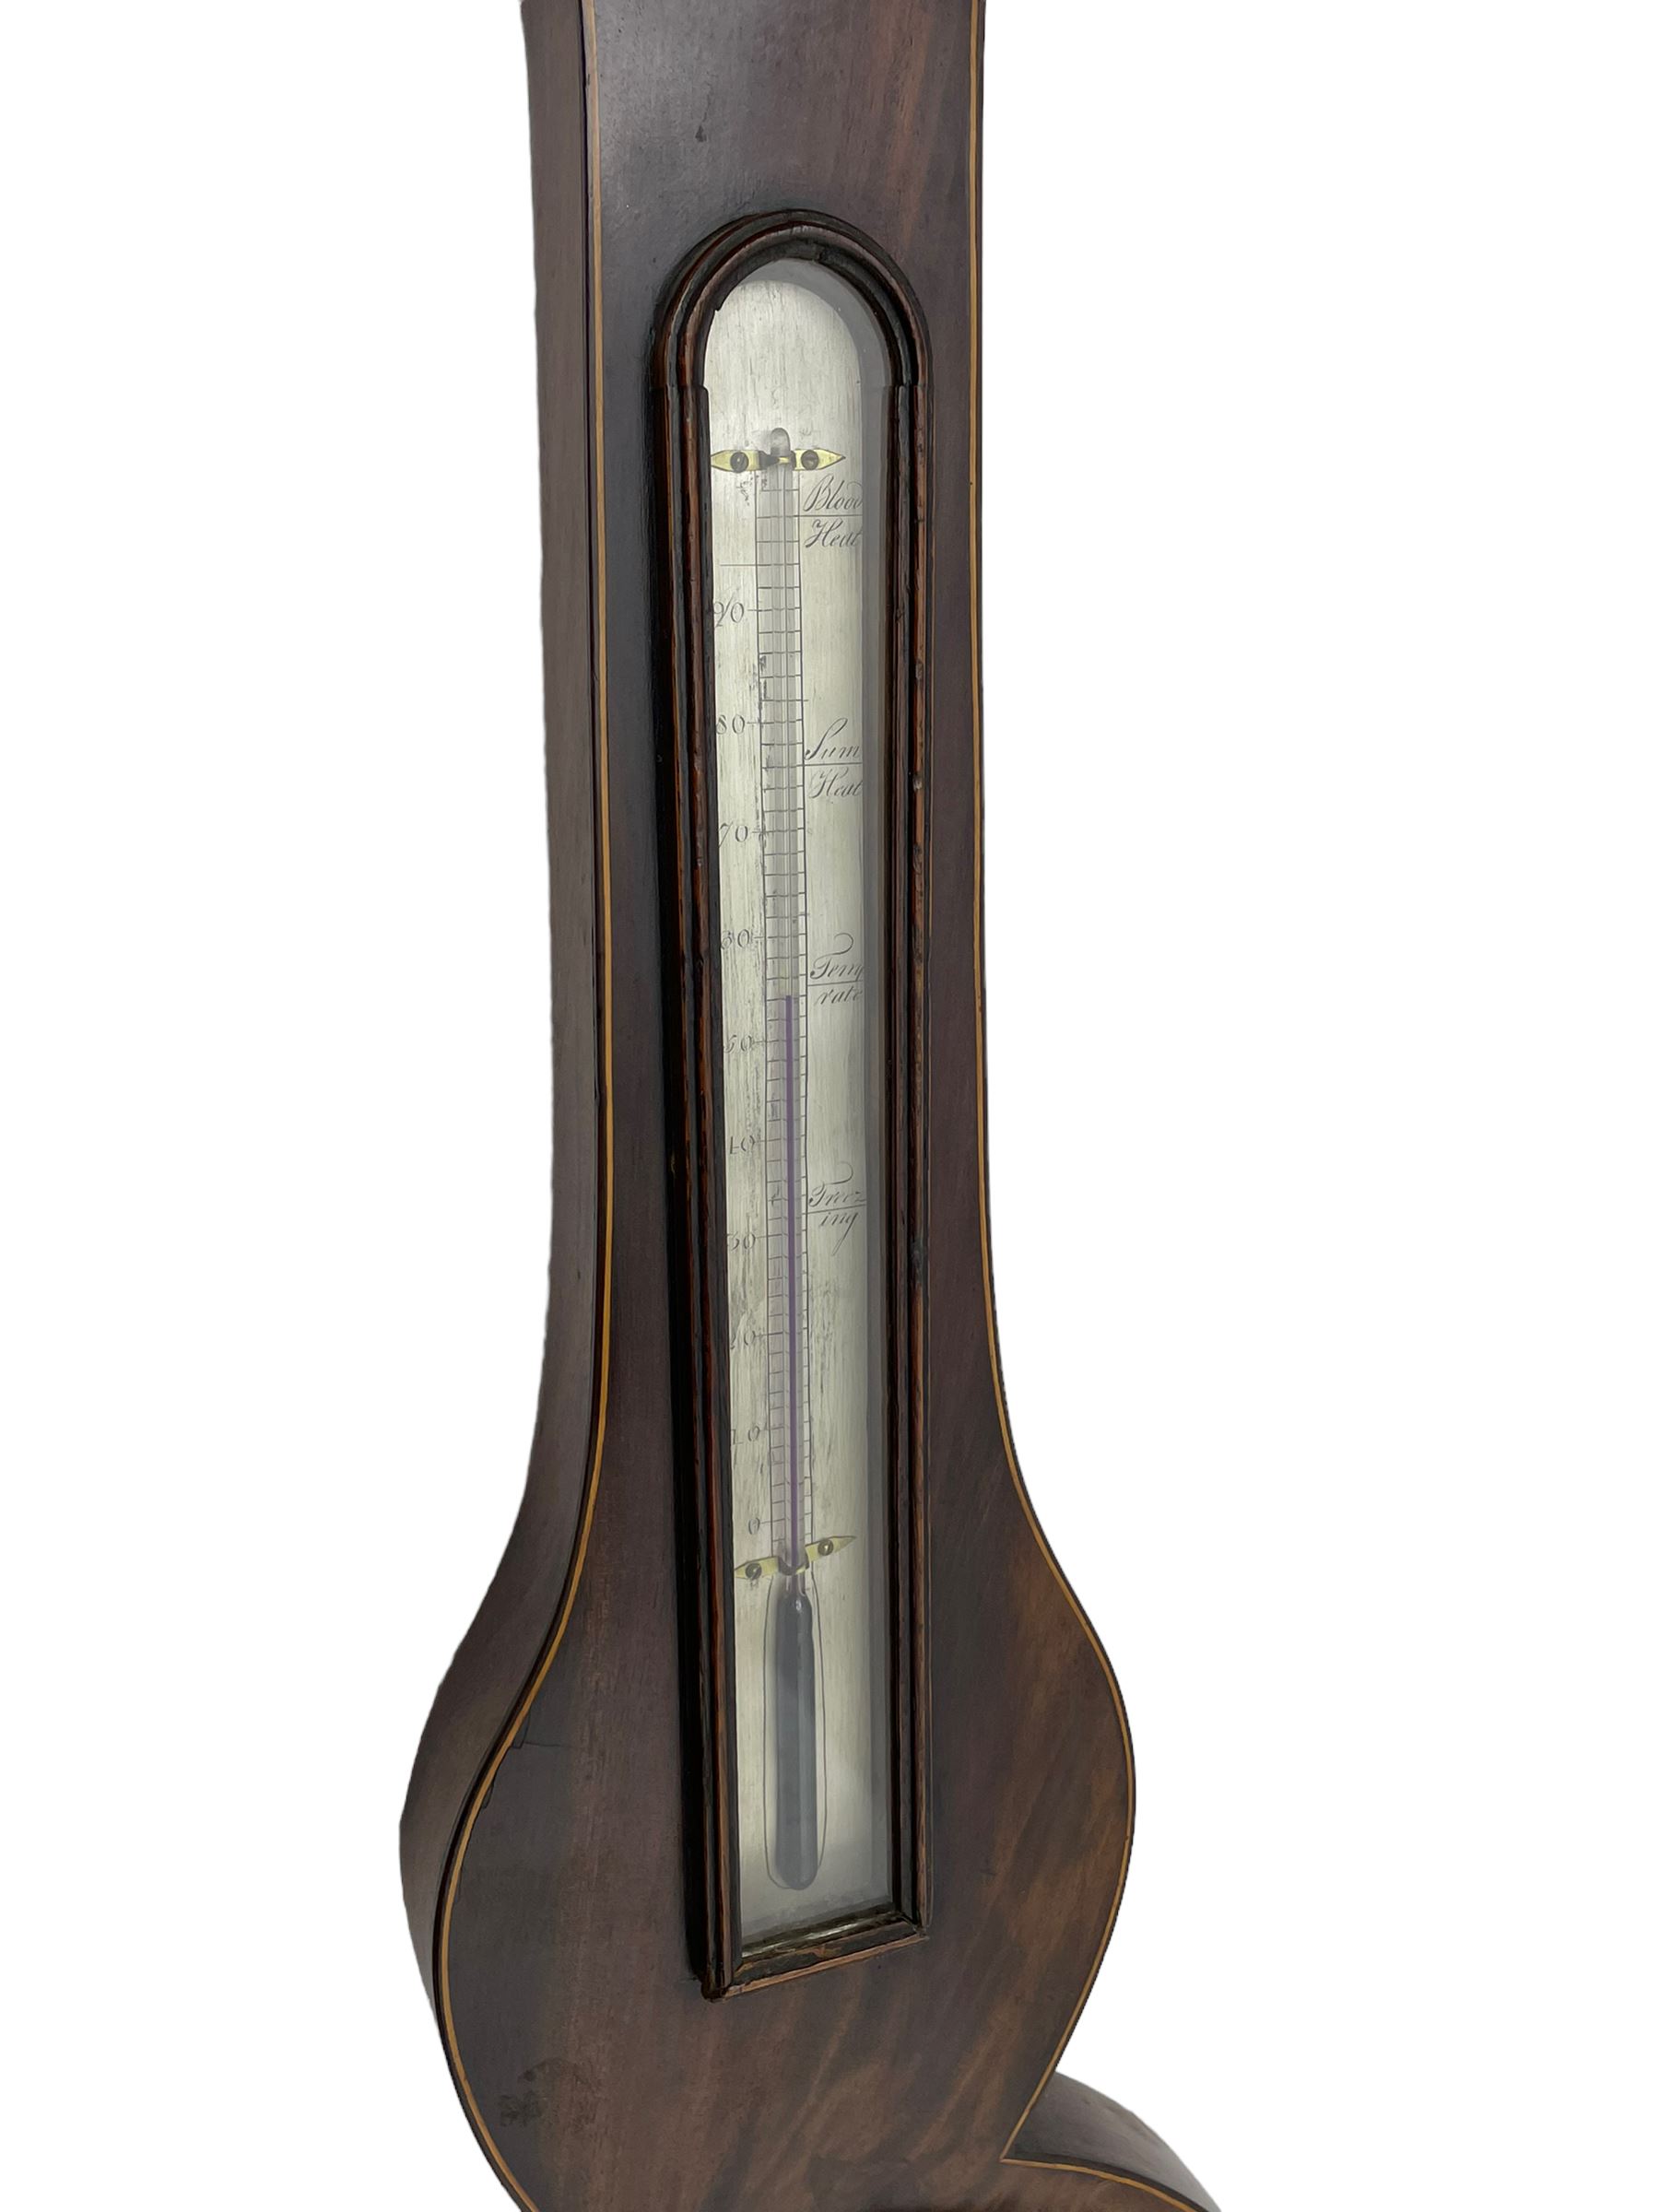 Hitzman & Co of Cambridge - Early 19th century mahogany mercury wheel barometer c1830 - Image 2 of 7